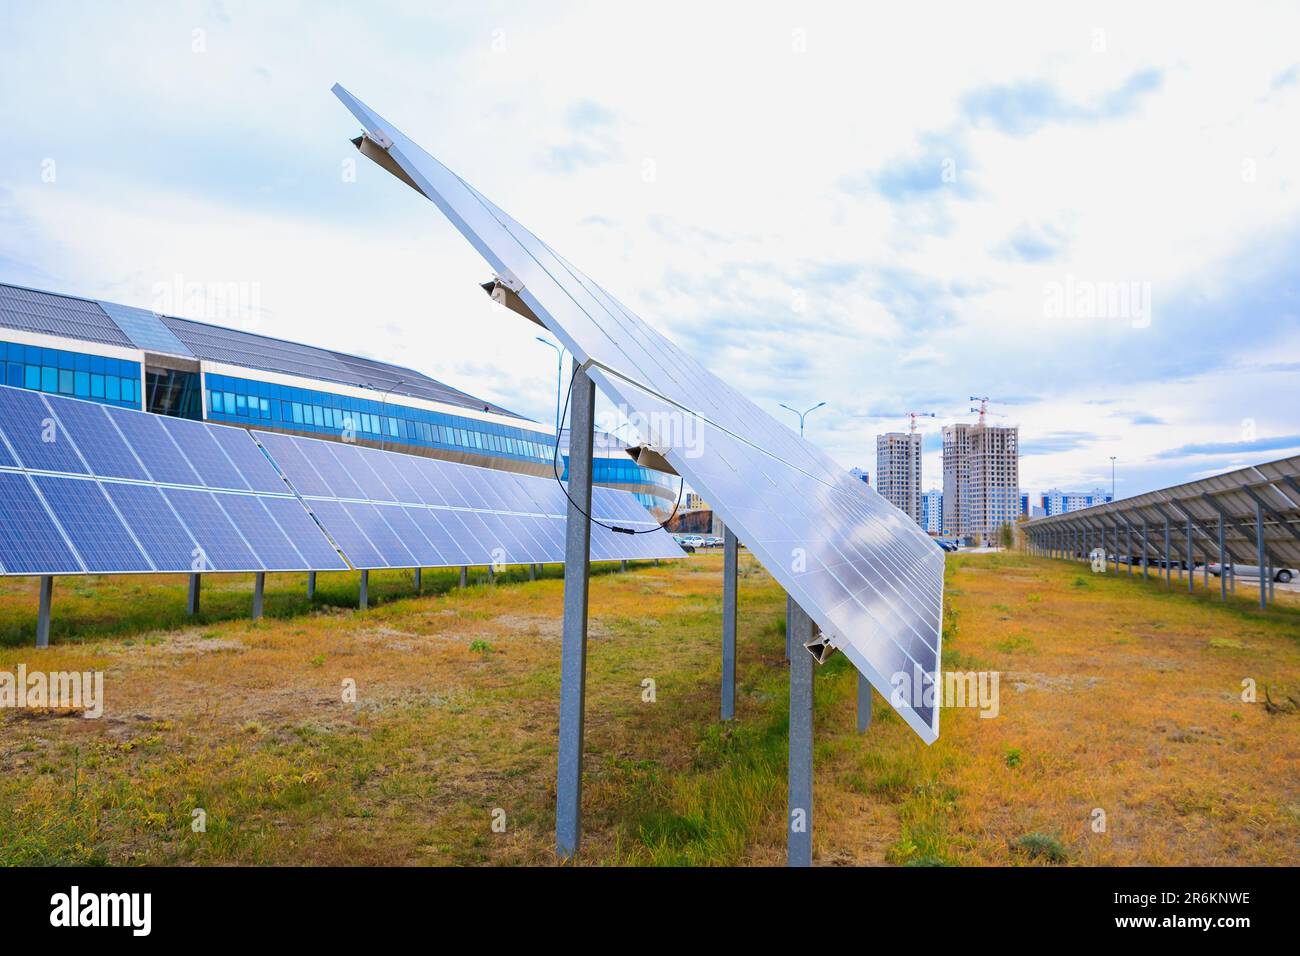 Am Boden montierte Solarenergie-Photovoltaikmodule auf Gras. Solarenergiesystem. Nahaufnahme. Stockfoto